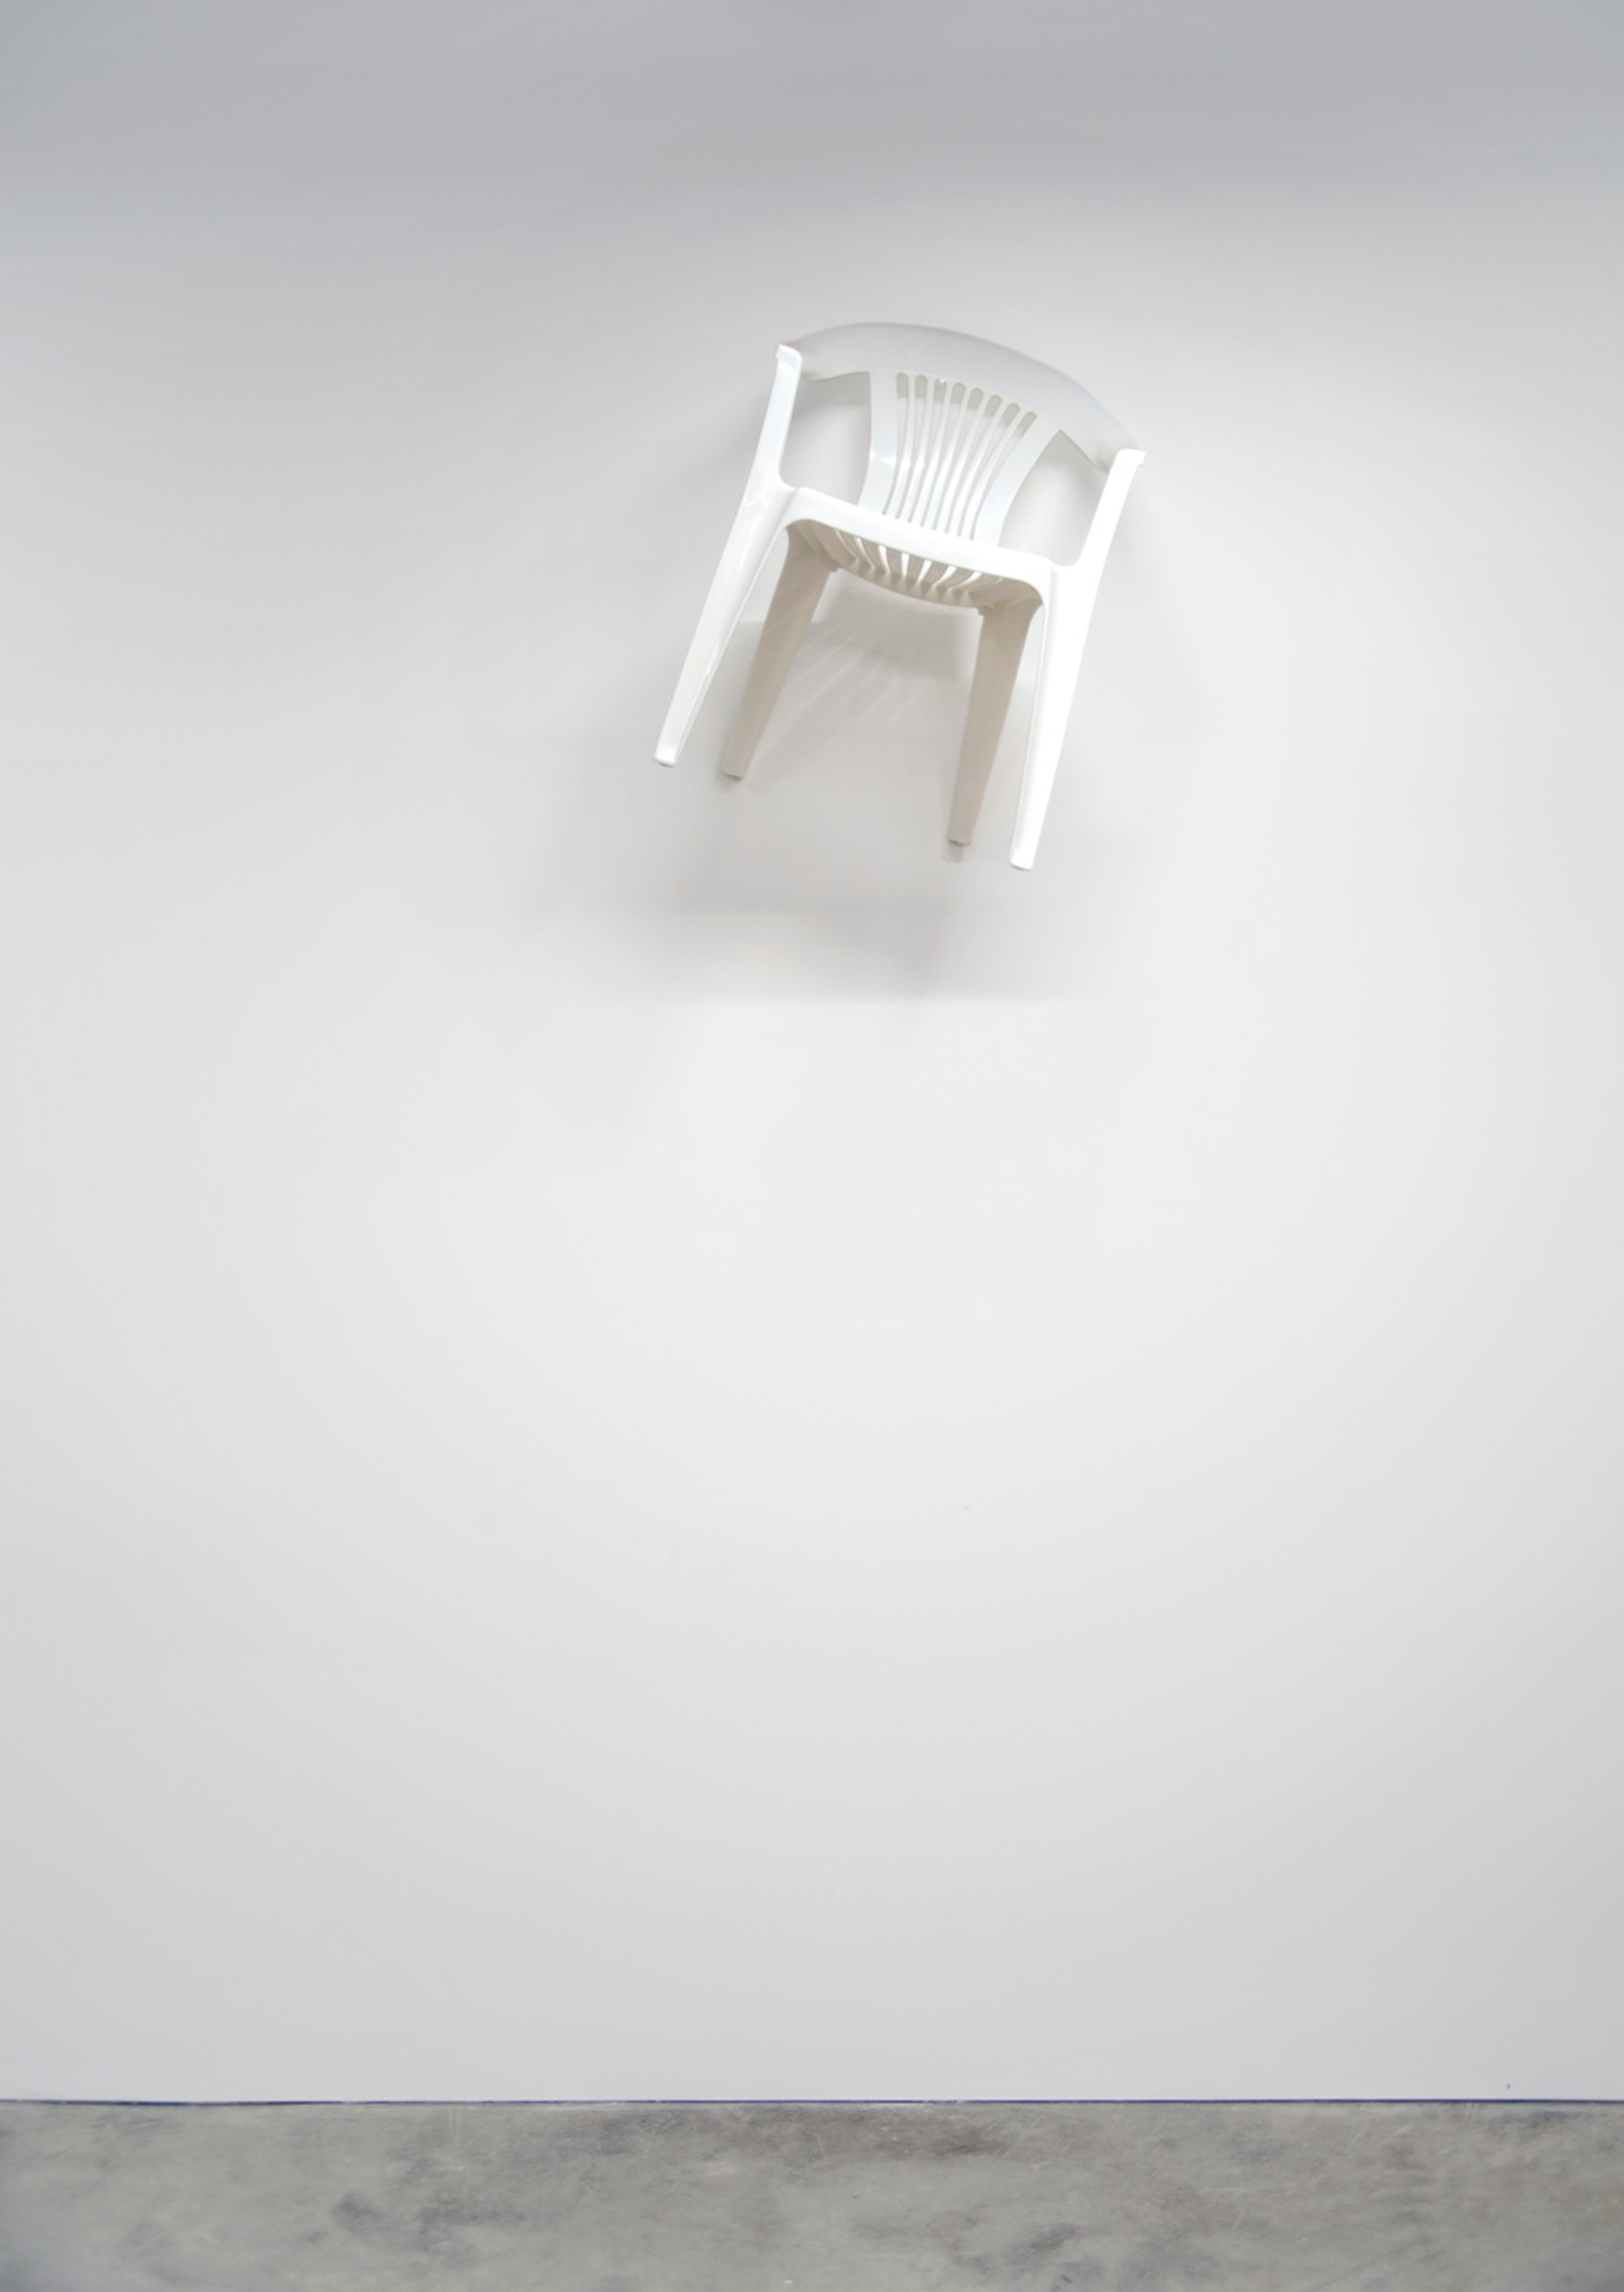 Stefanos Mandrake, Plastic Chair (2016). Found white plastic chair on wall.